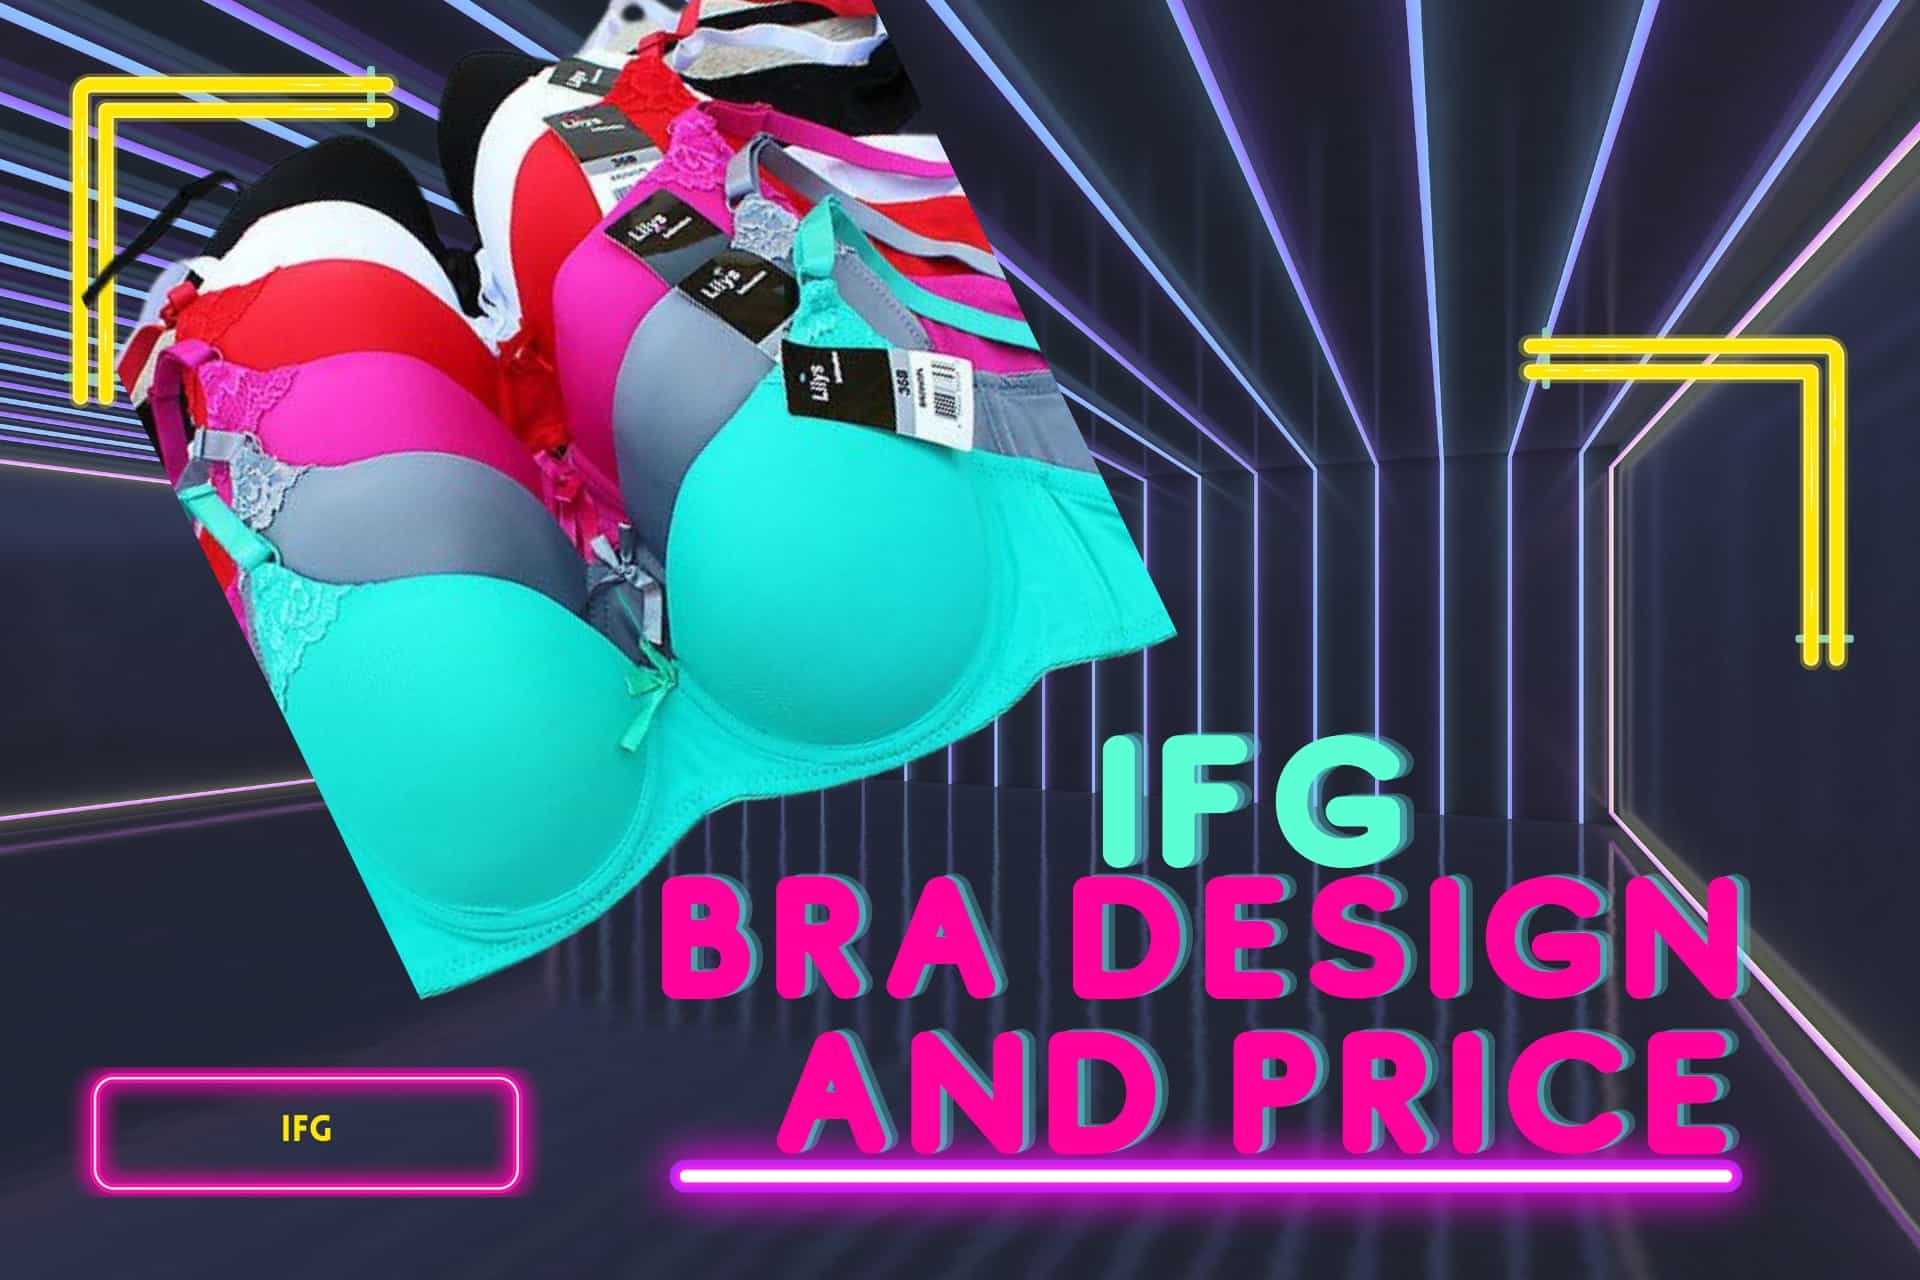 Buy IFG Bra, Ladies Bra